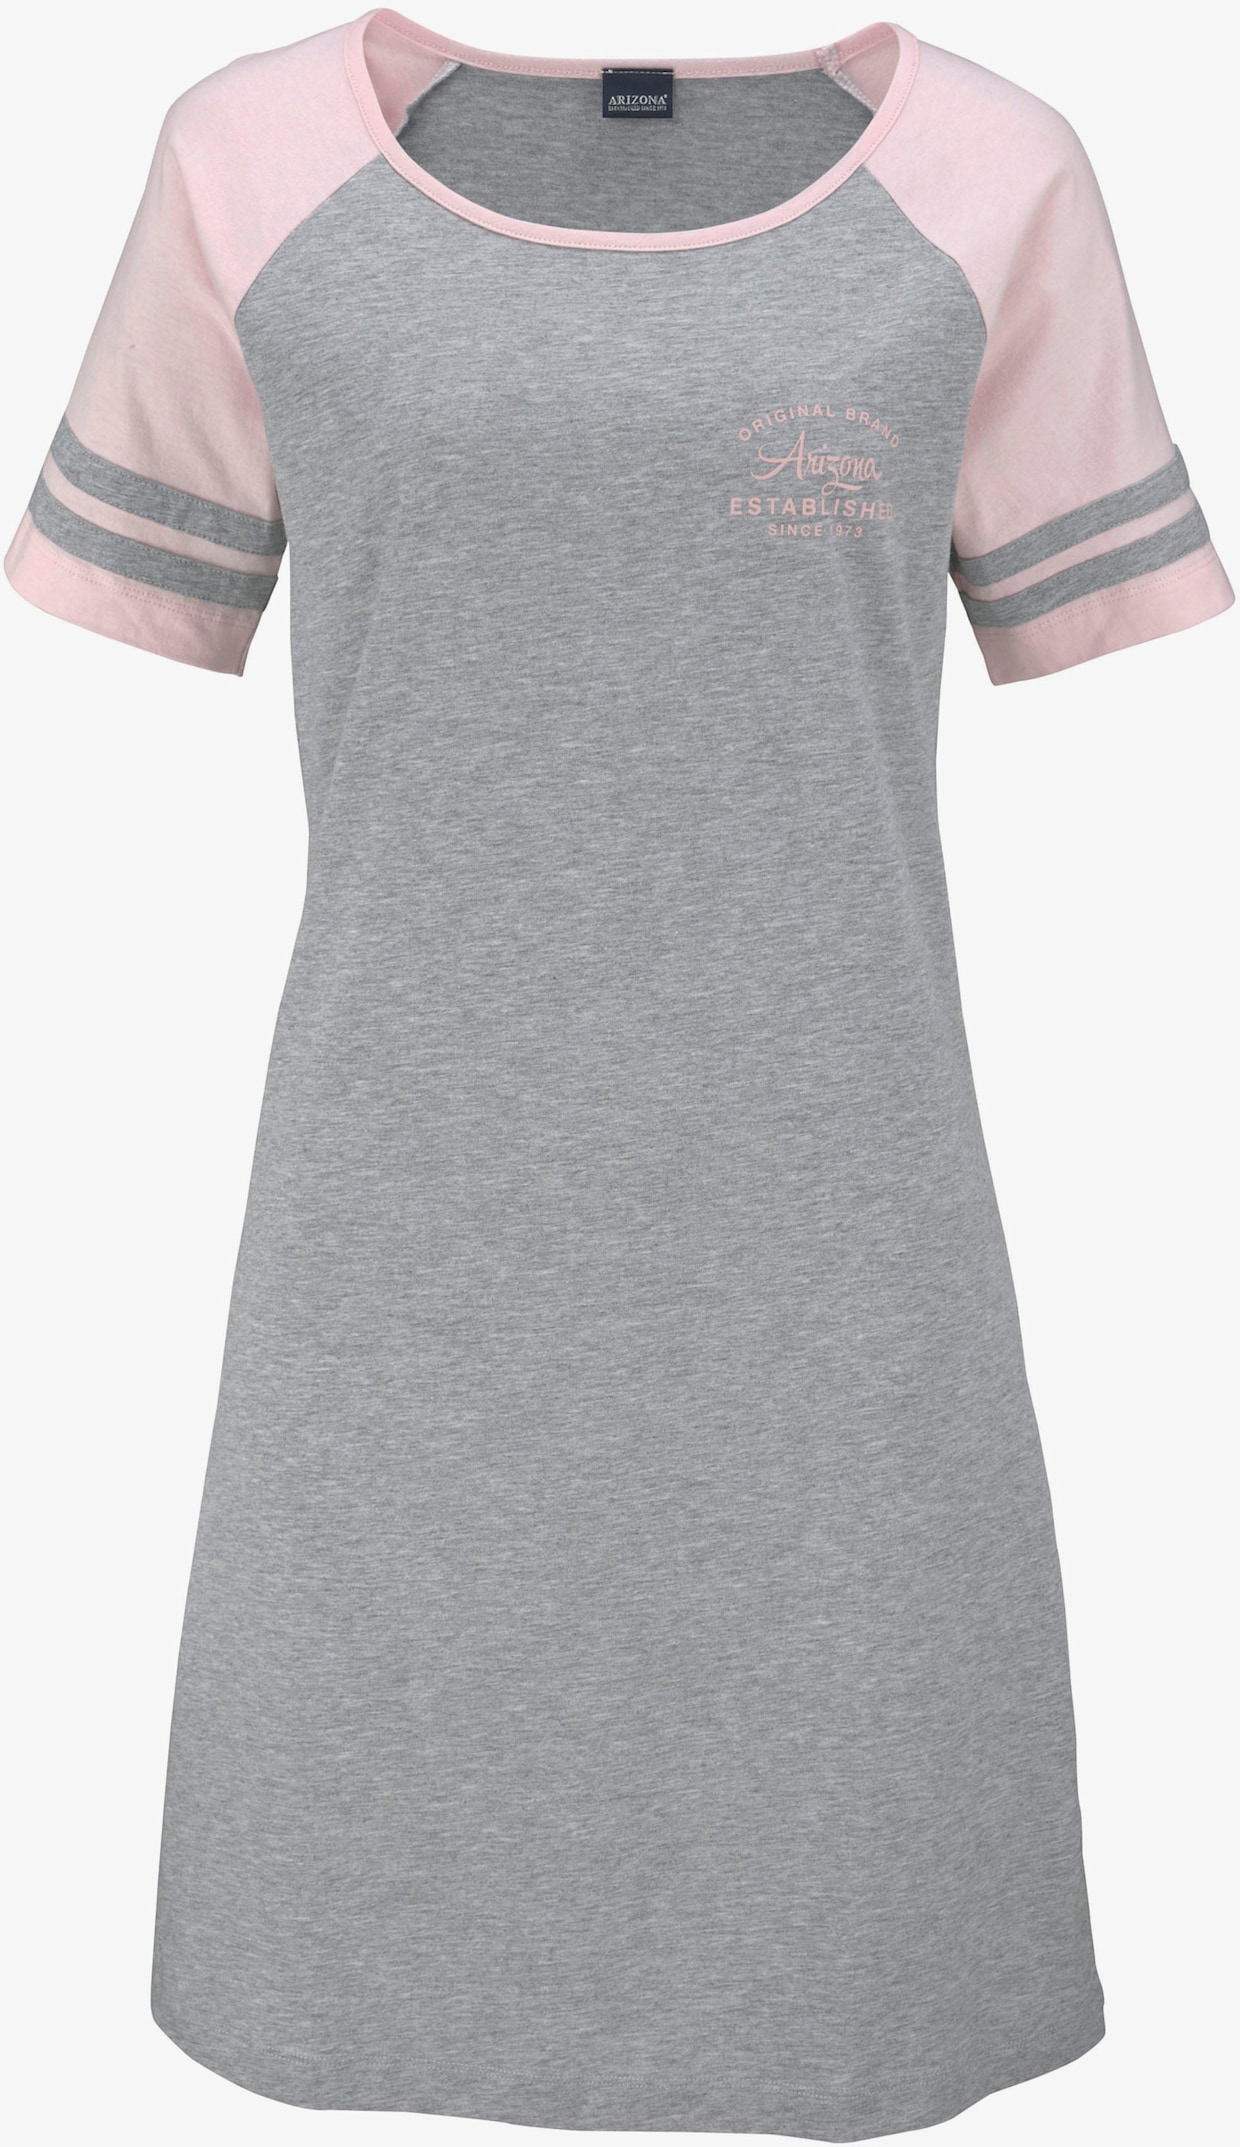 Arizona Chemise de nuit - gris-rose